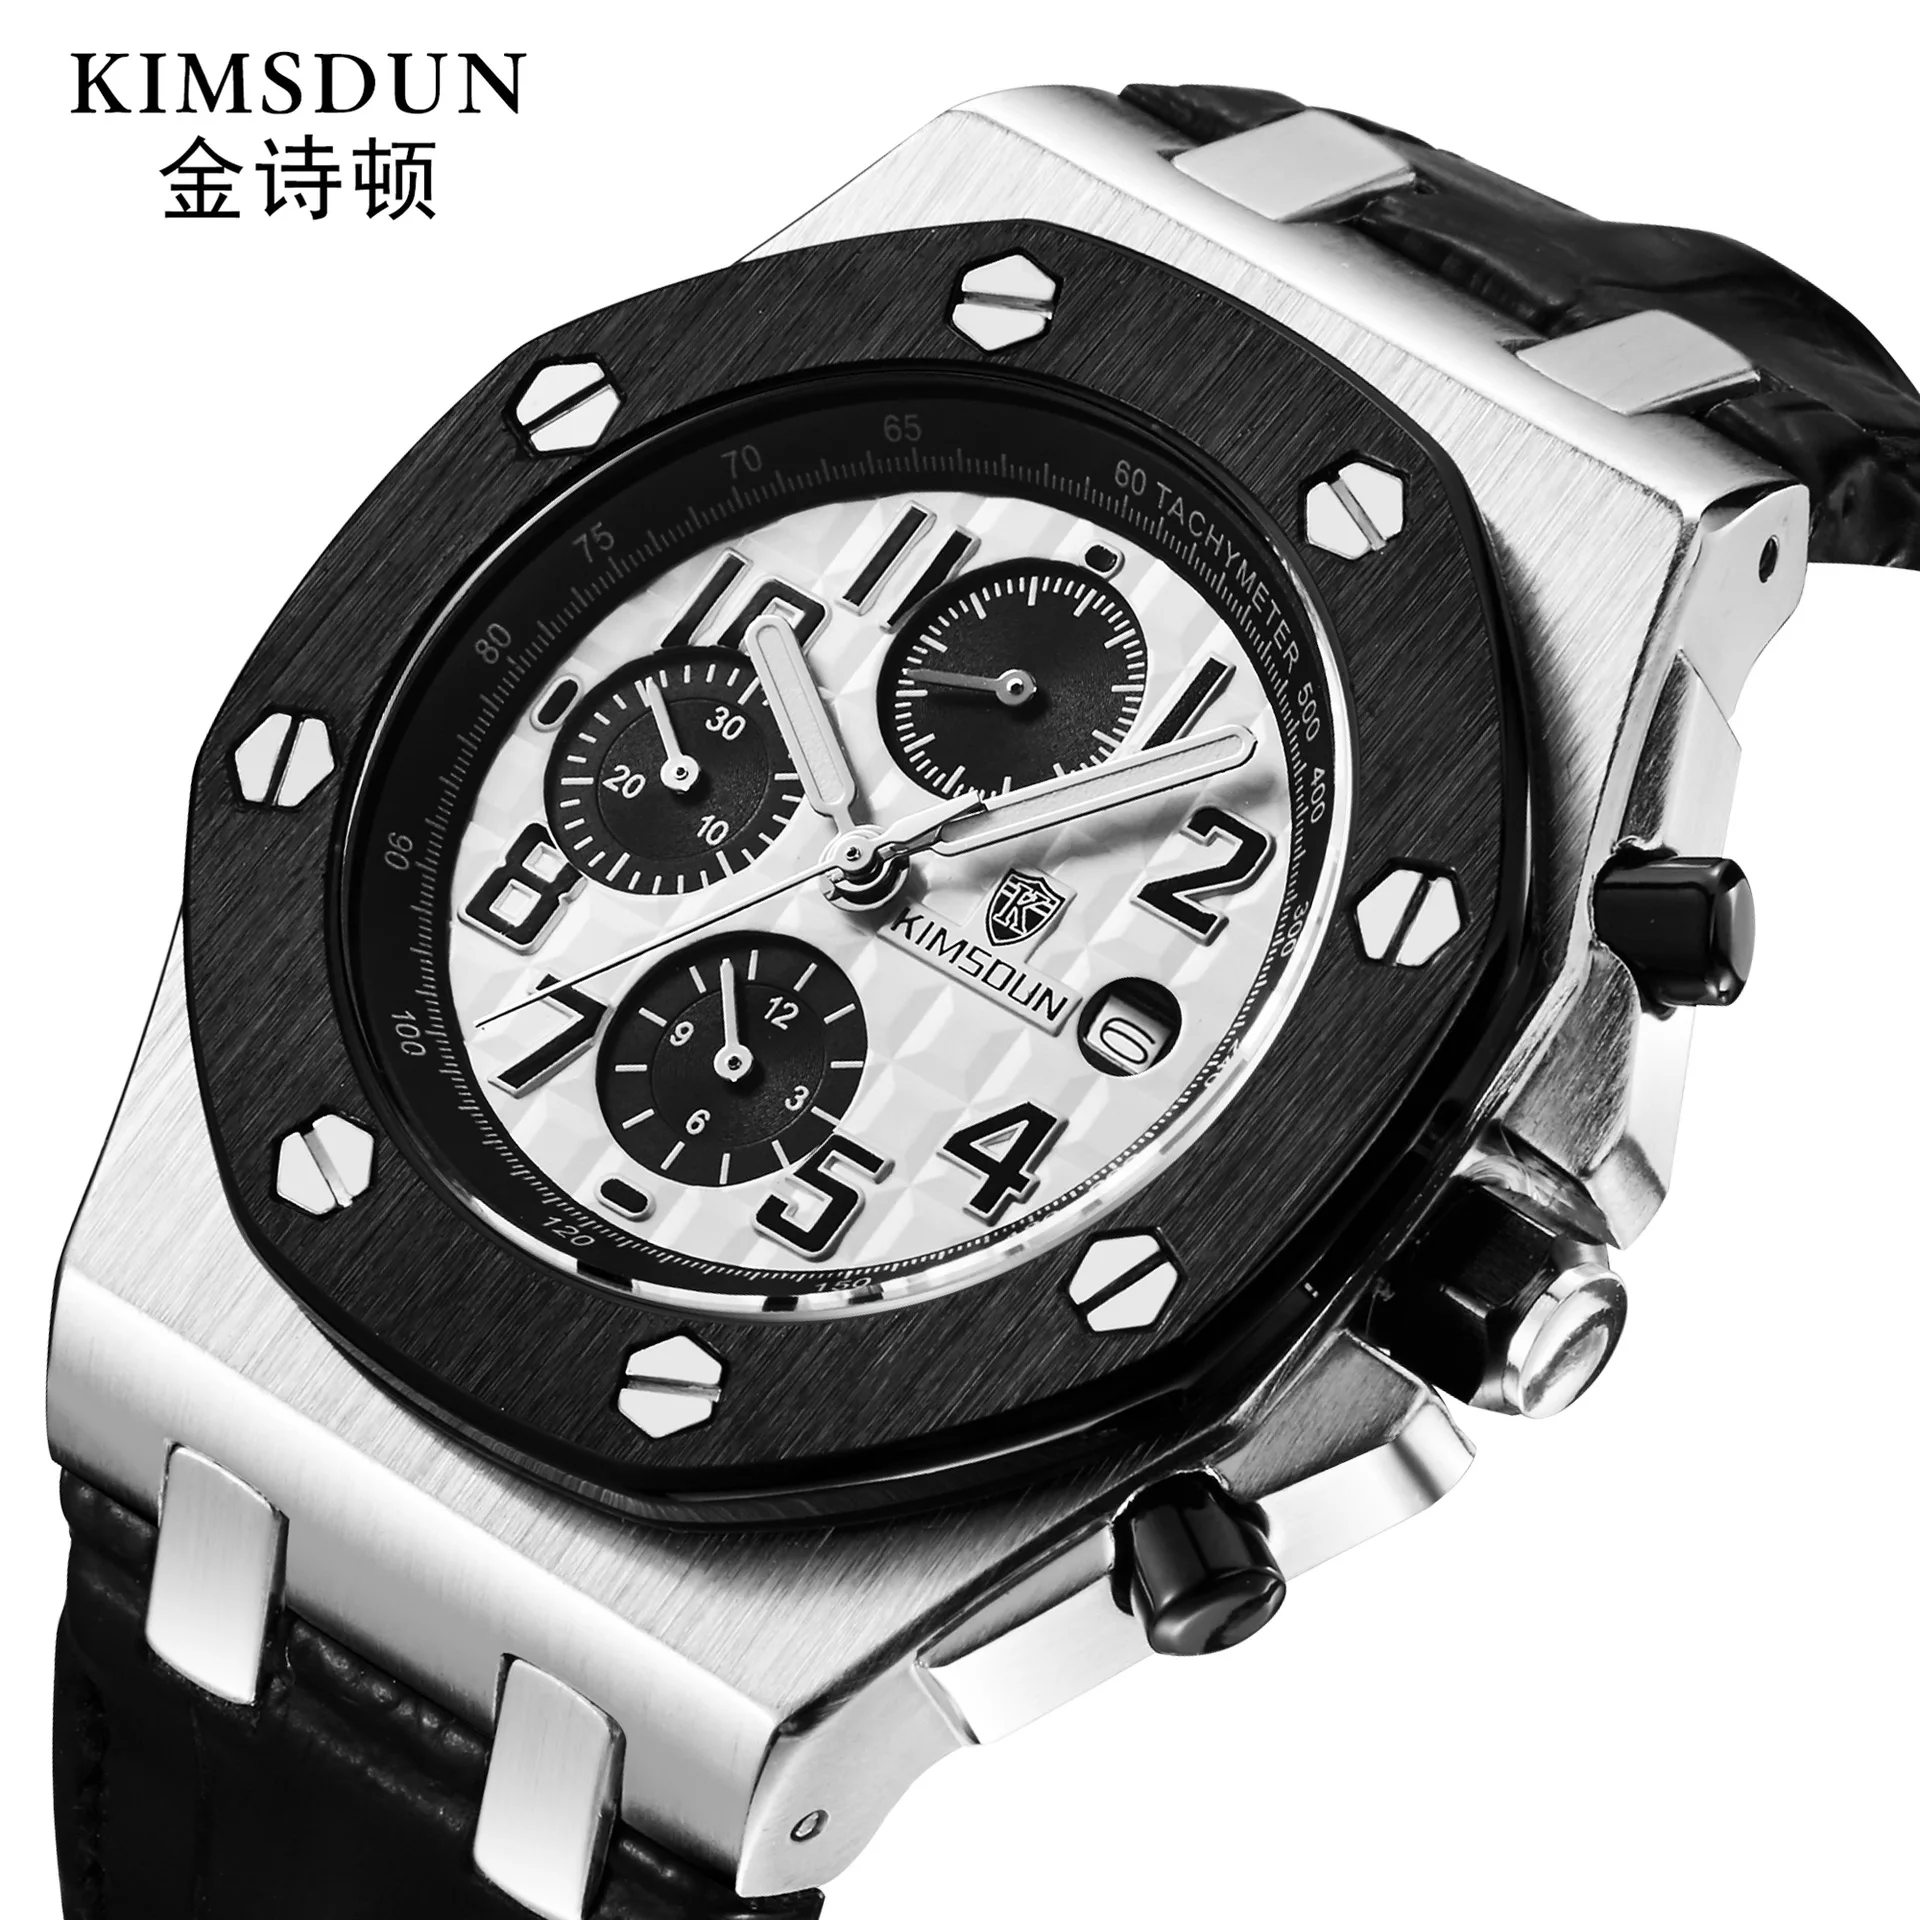 

2019 Relogio Masculino KIMSDUN Top Brand New Men Leather Waterproof Date Automatic Mechanical Watch Men's Watches Fashion Clock